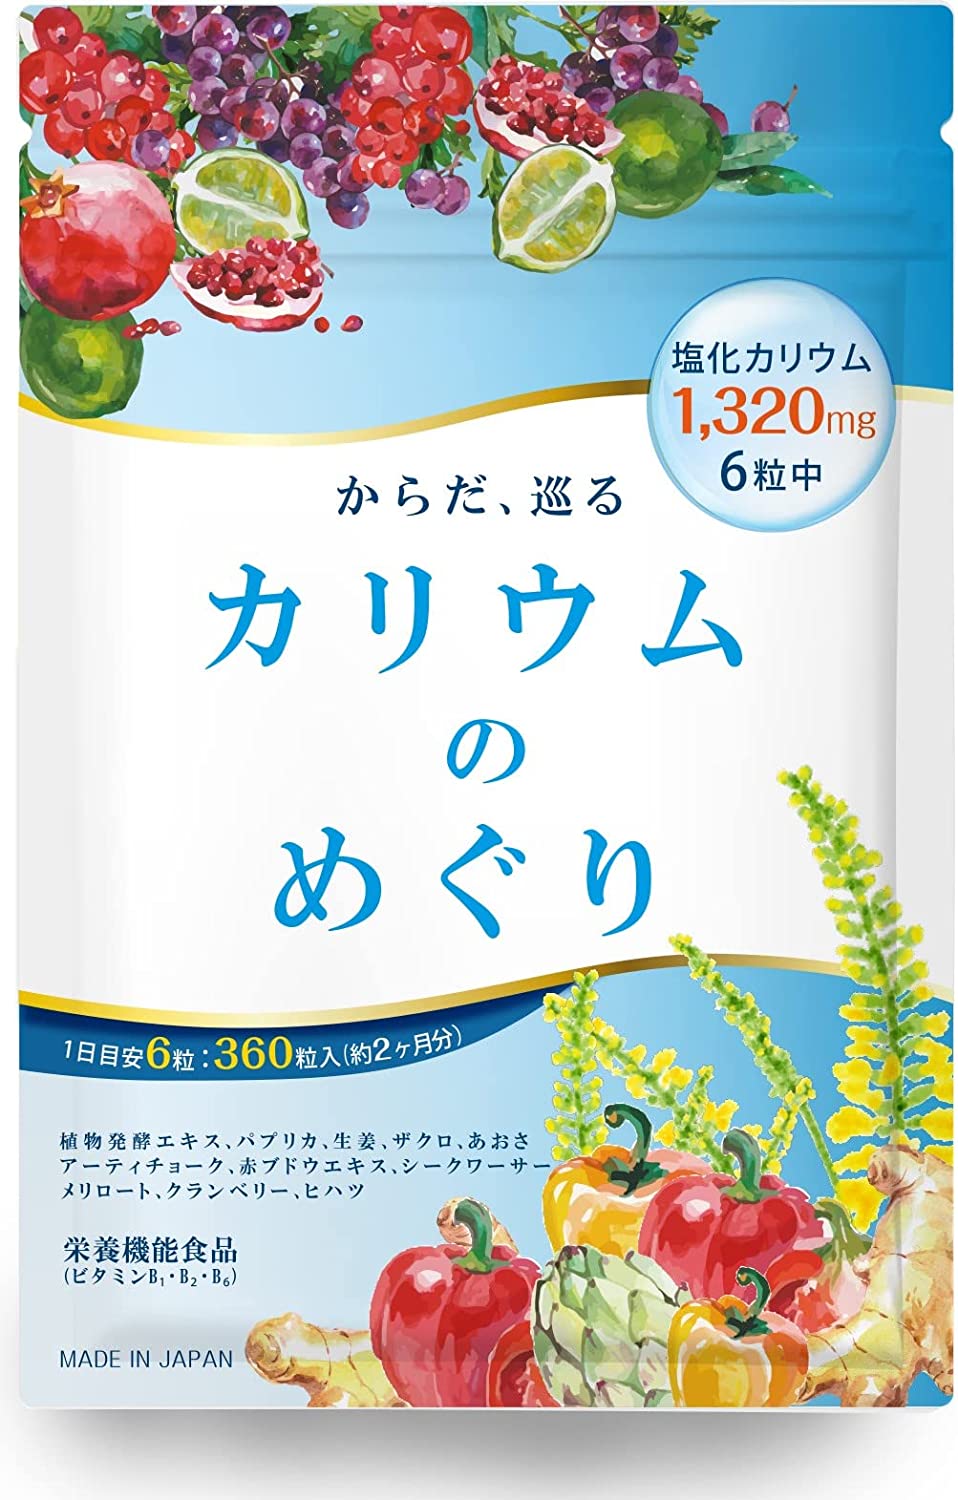 Калий Potassium Meguri 1320 мг, 360 таблеток калий allergy research group potassium citrate 99 мг 120 таблеток 2 предмета